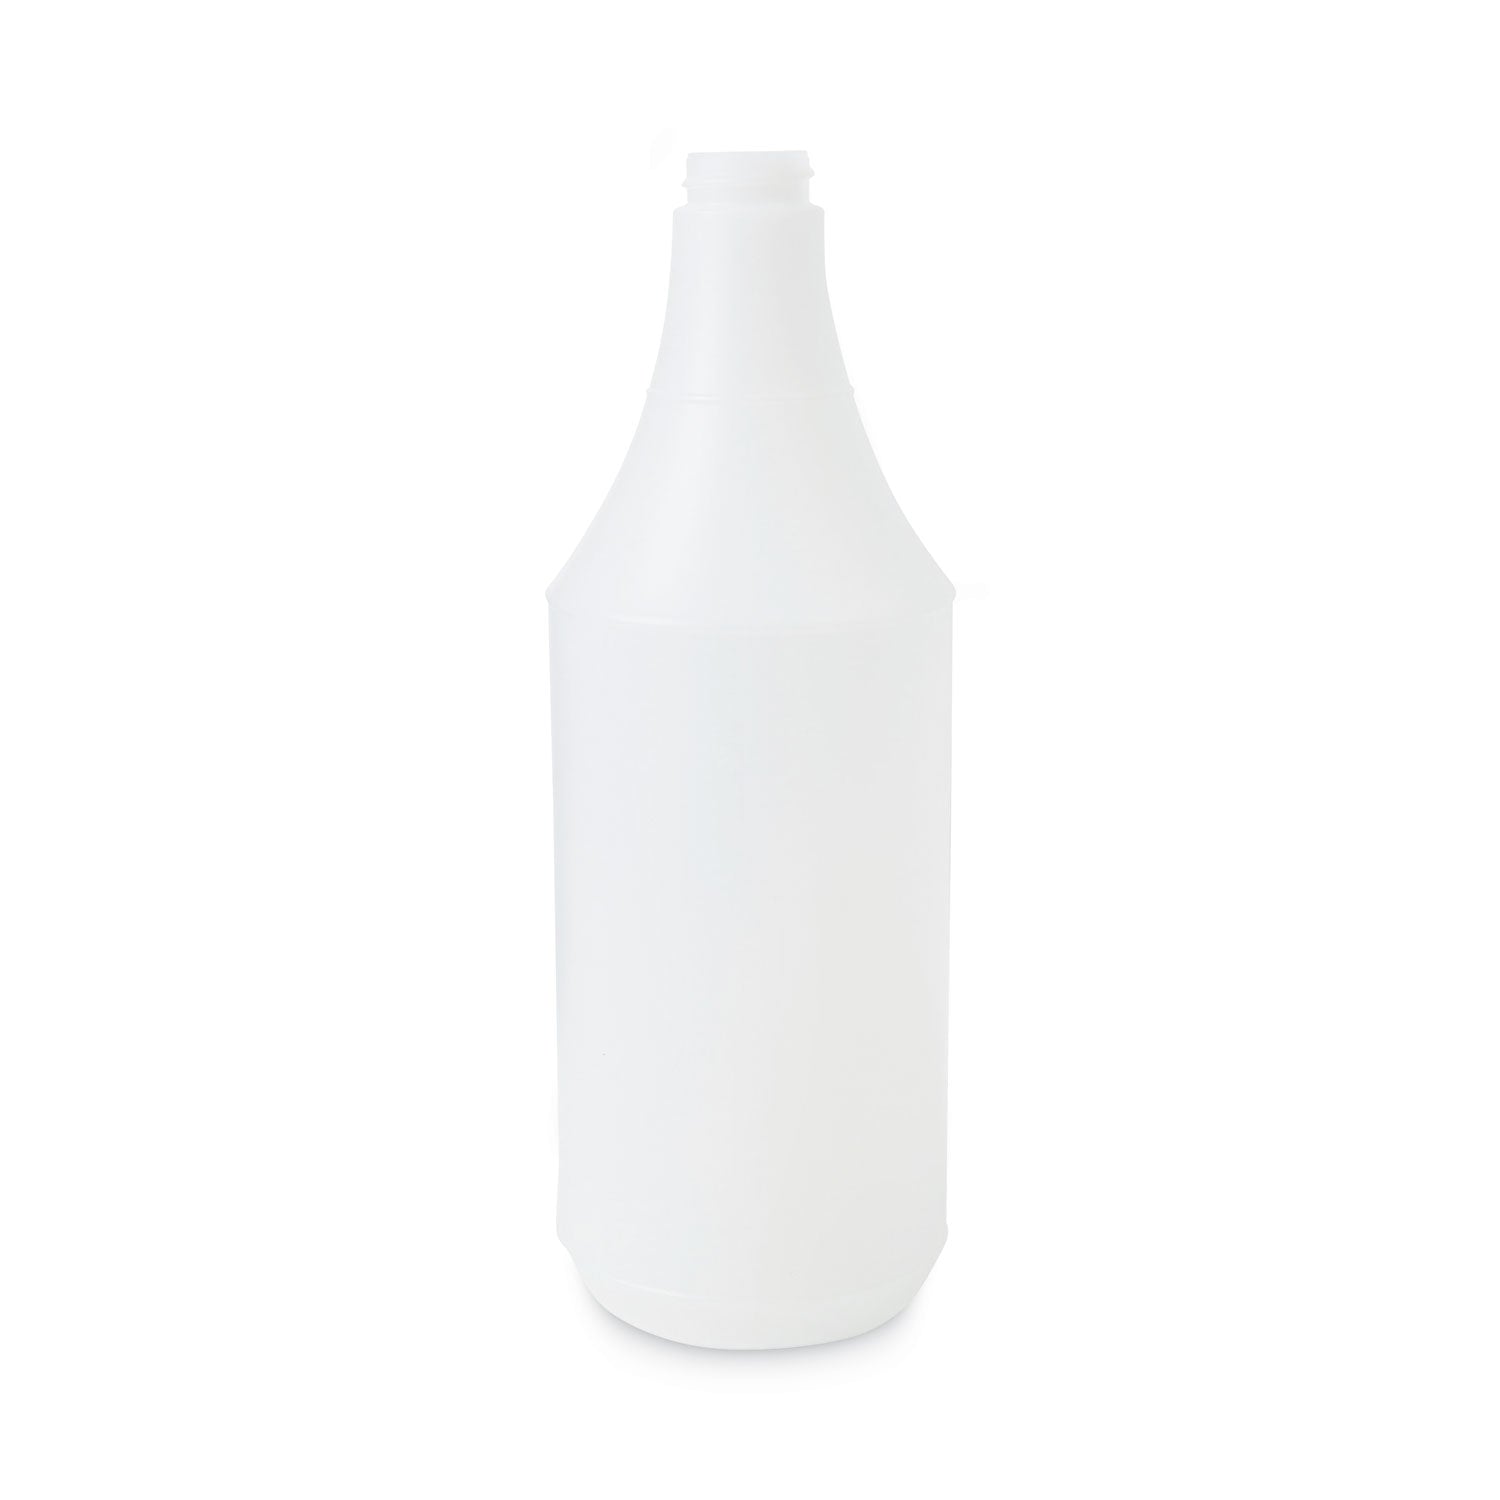 embossed-spray-bottle-32-oz-clear-24-carton_bwk00032 - 5